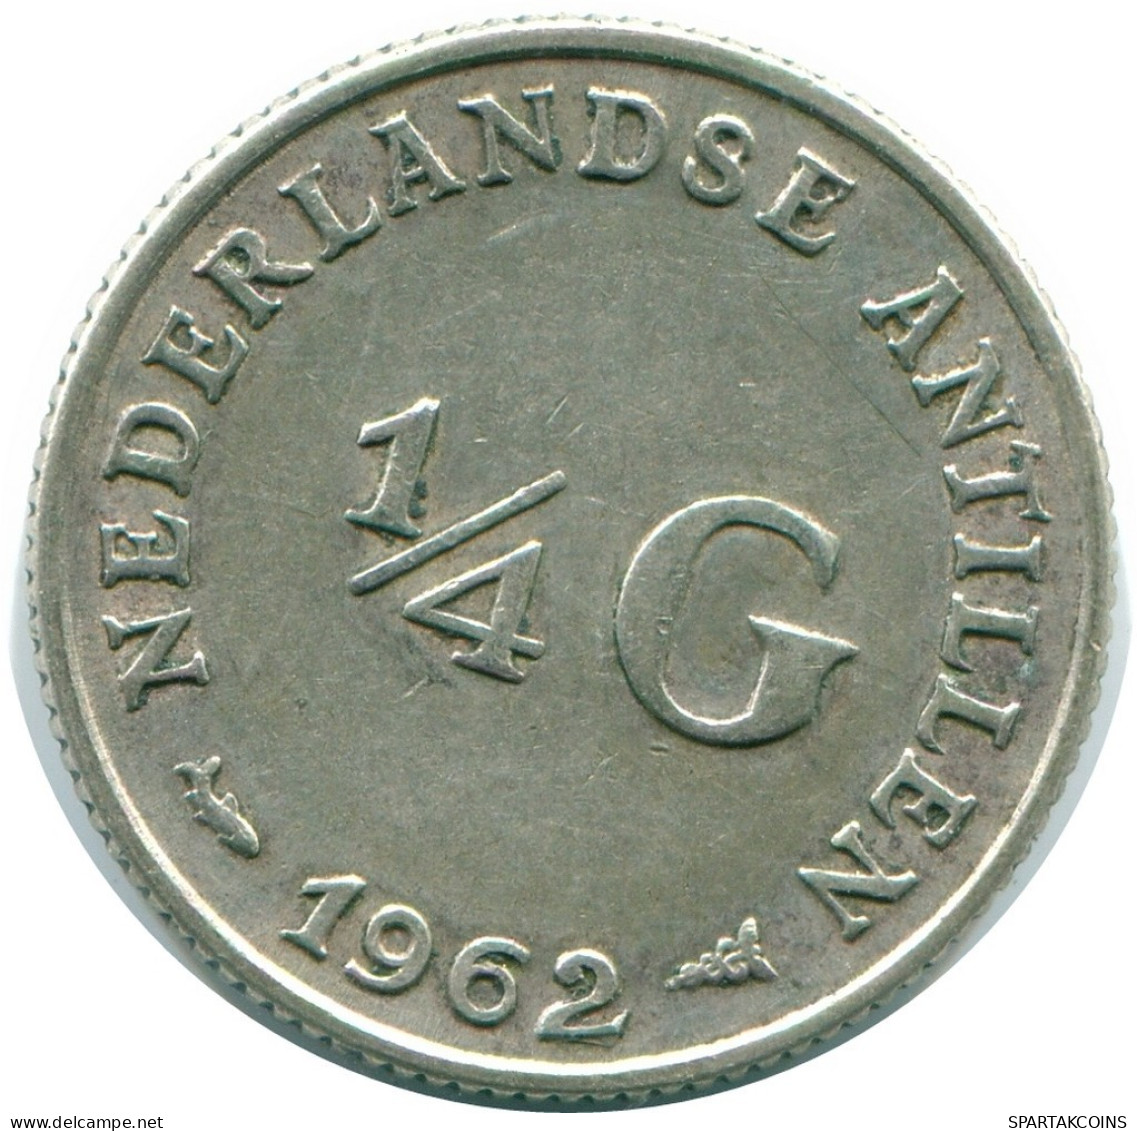 1/4 GULDEN 1962 NETHERLANDS ANTILLES SILVER Colonial Coin #NL11163.4.U.A - Netherlands Antilles